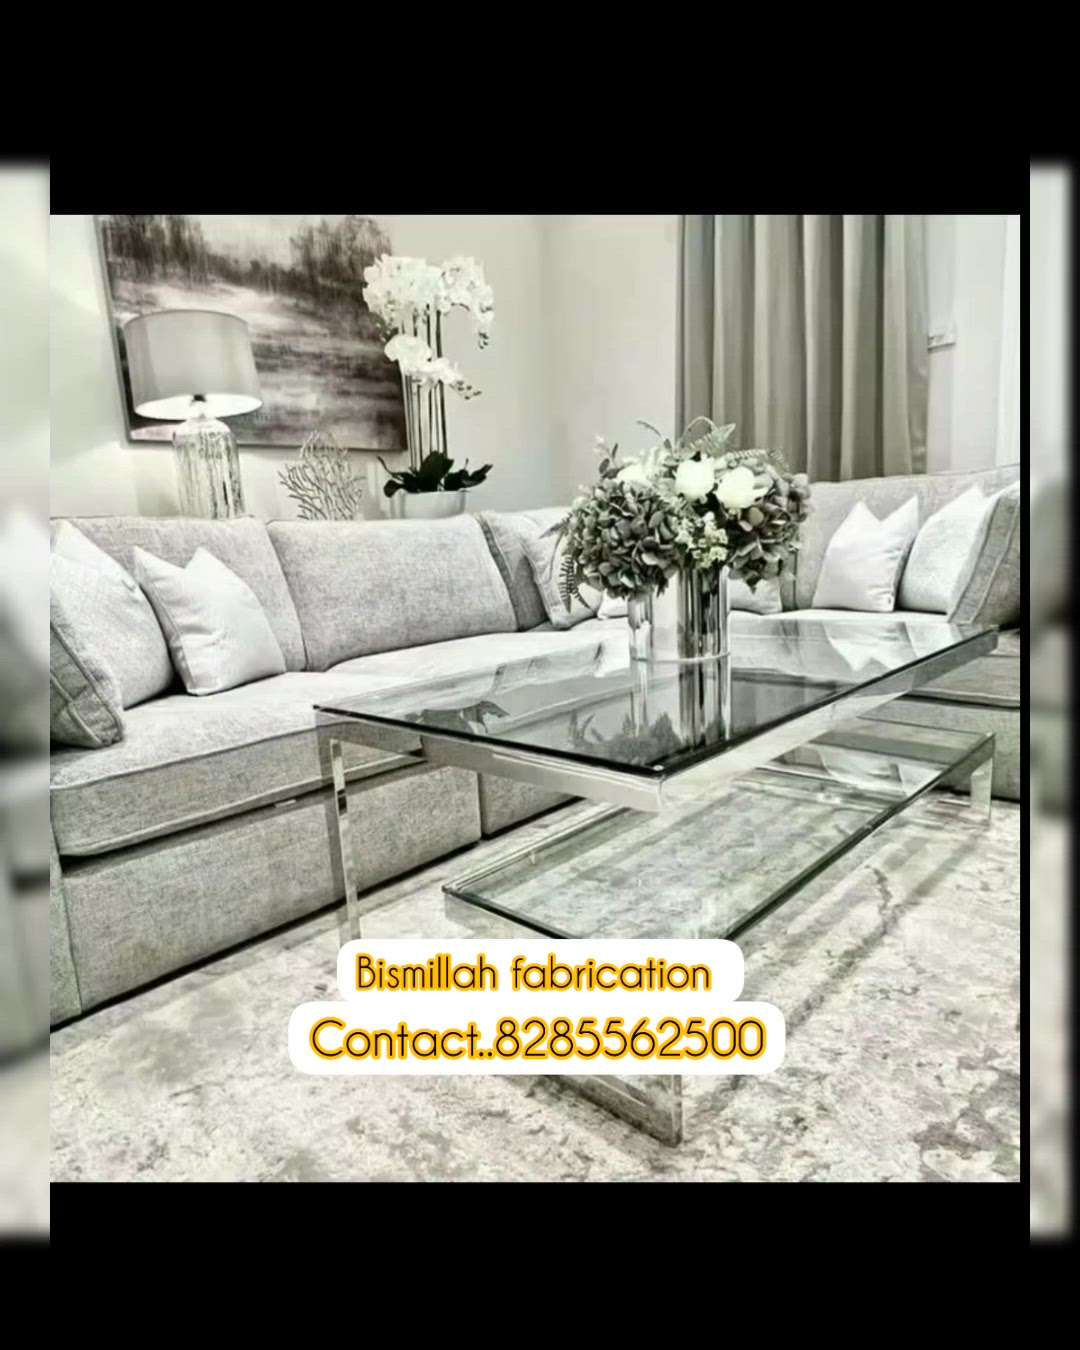 fancy steel table 😍👉 contact 👇
...8285562500 ..
.
#koloapp  #kolotipes  #kolo-ed  #koloapp  #trendystudytable  #trendywashcounter  #trendinghomedecor  #postforyou  #welldesign